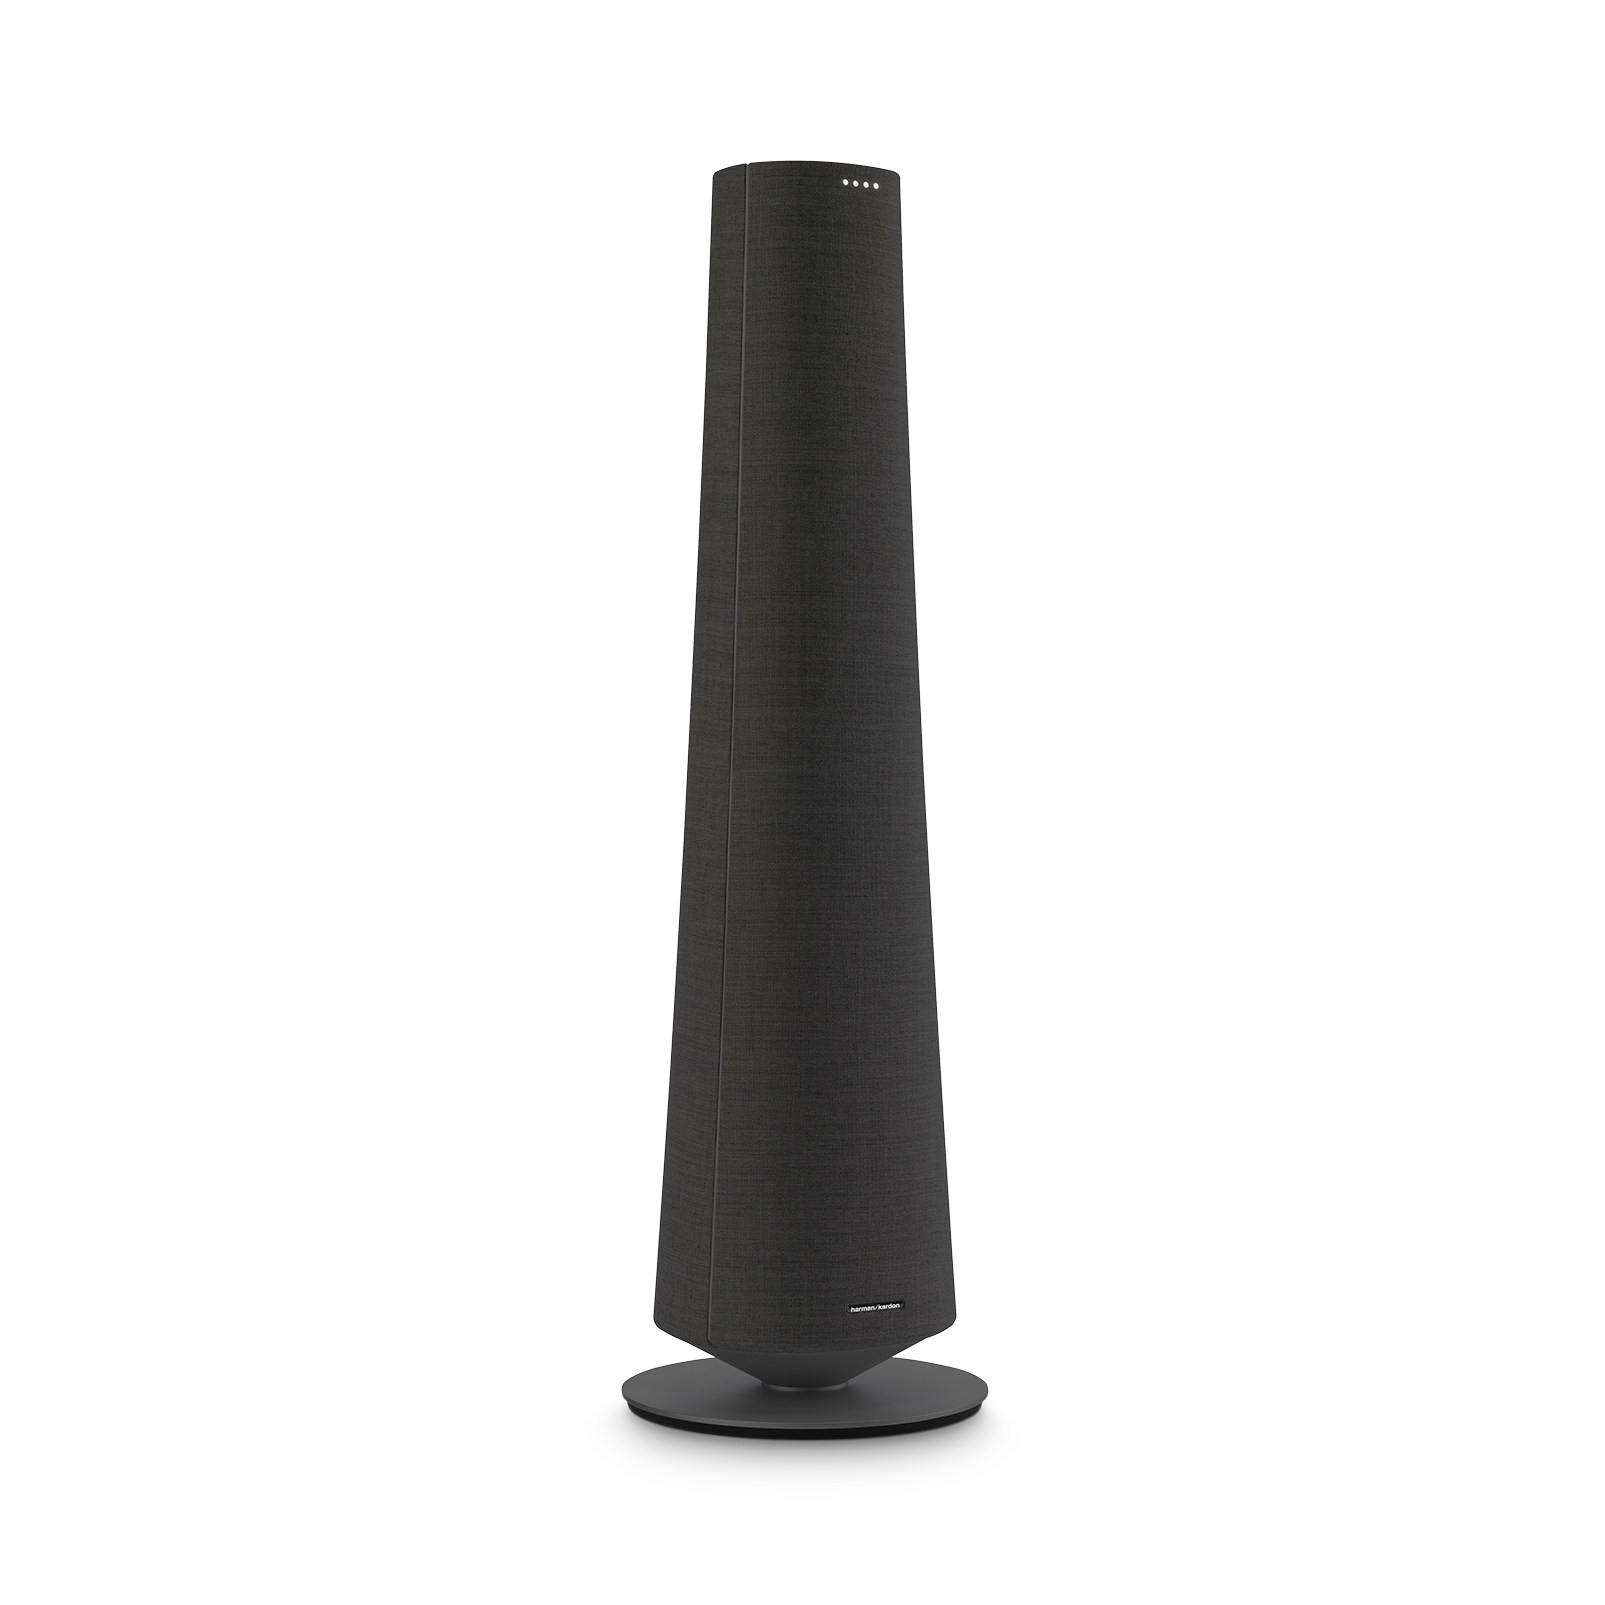 Harman Kardon Citation Tower - Black - Smart Premium Floorstanding Speaker that delivers an impactful performance - Detailshot 2